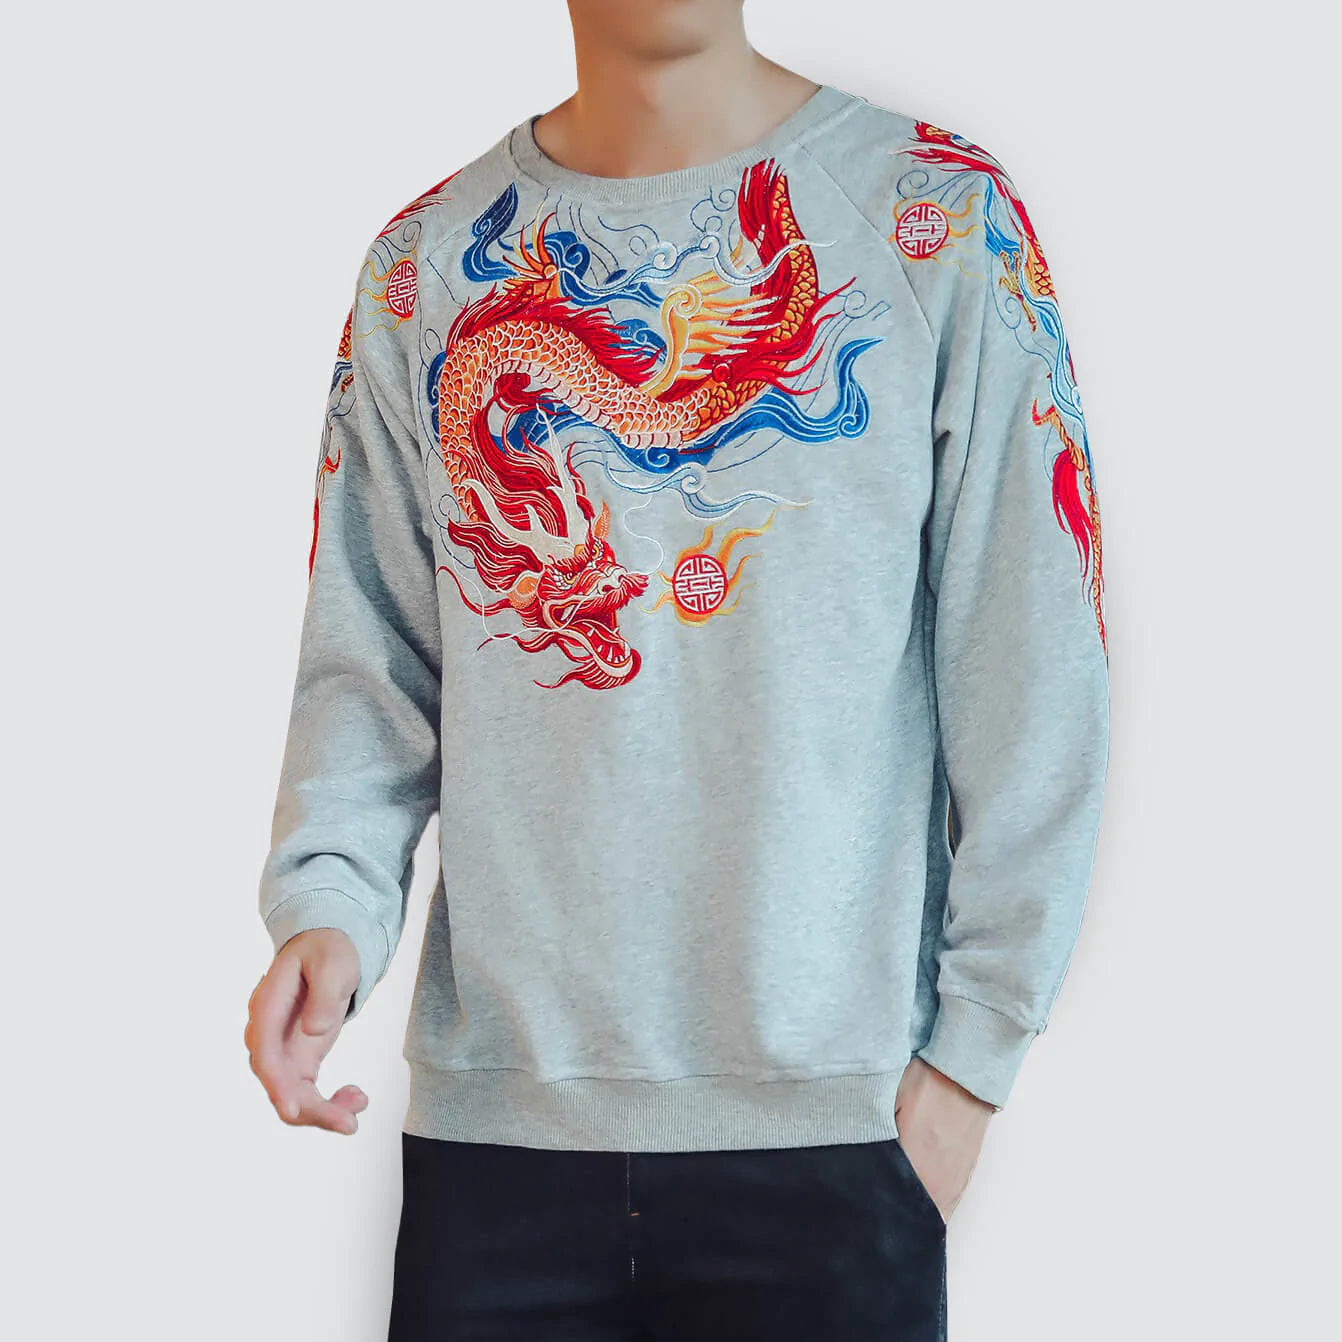 Dansu Dragon Sweatshirt - Kyoto Soul - 